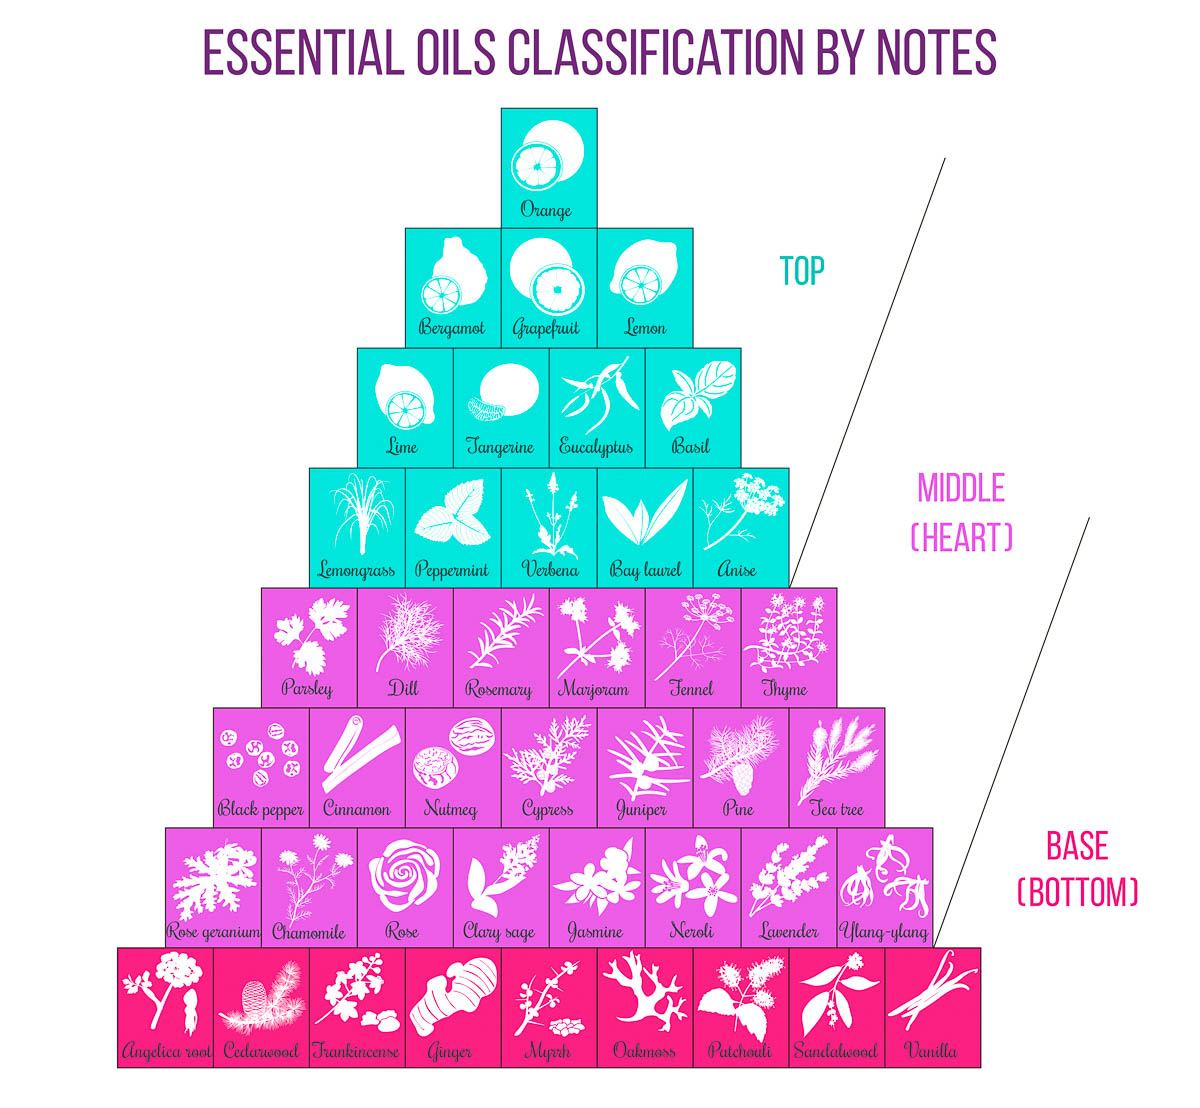 A fragrance pyramid for essential oils